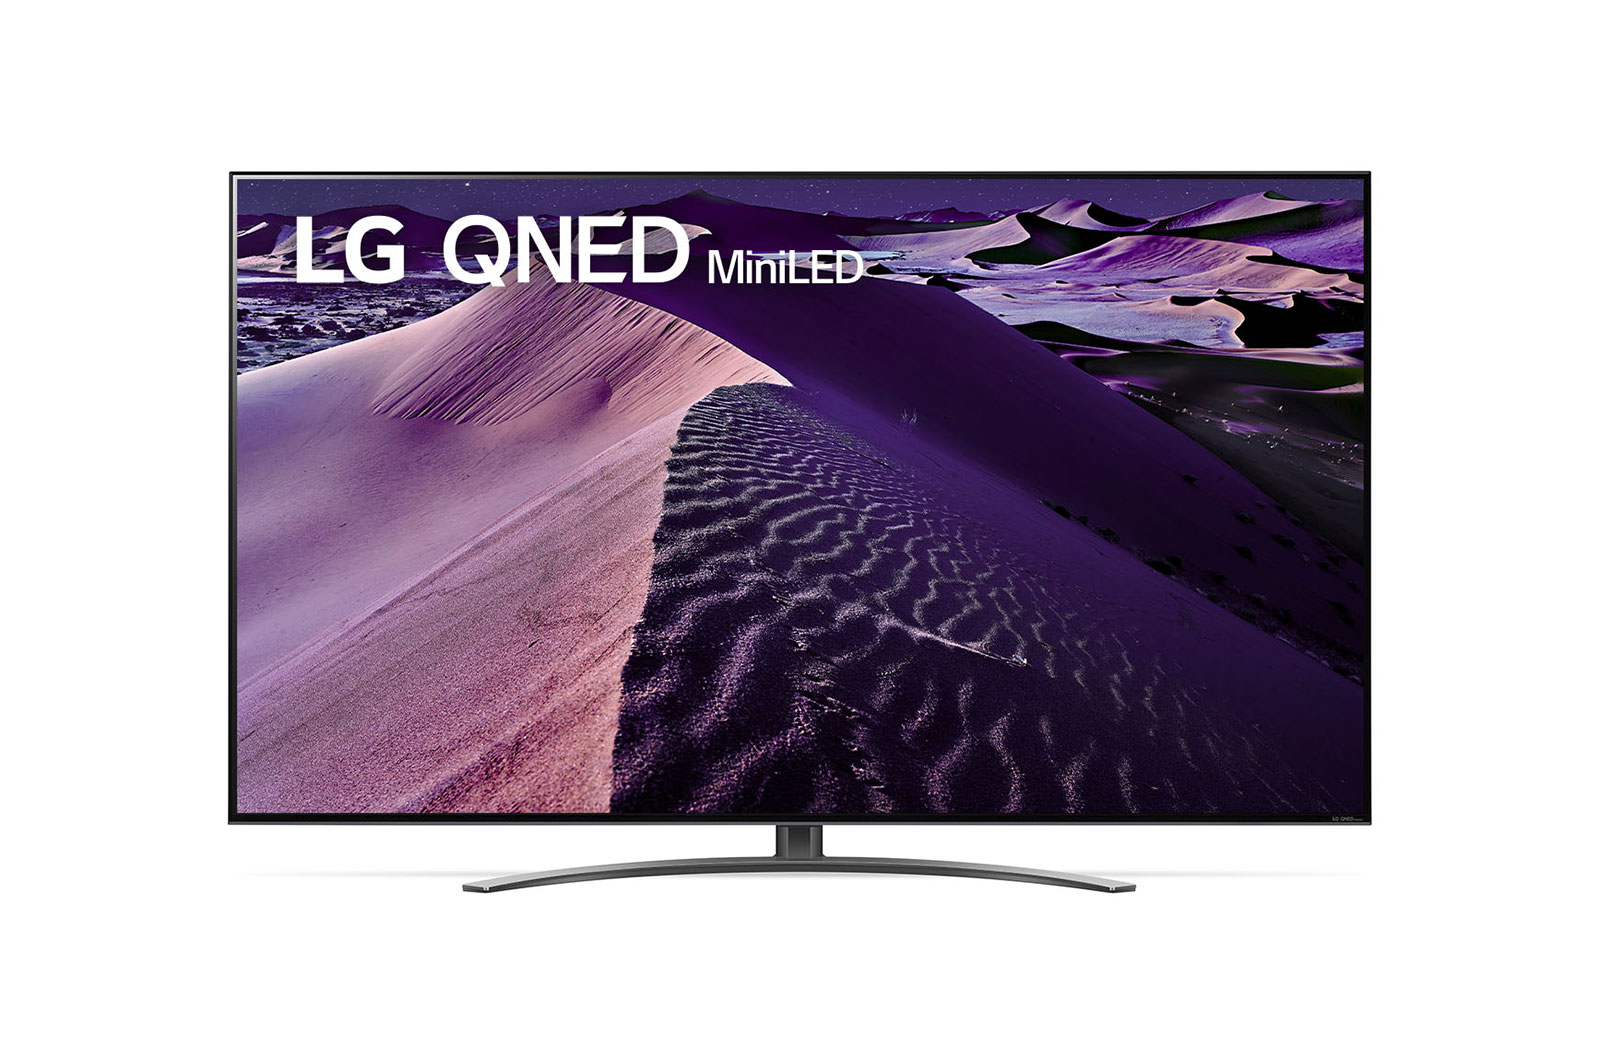 LG QNED TV Mini LED QNED86 55 inch 4K Smart TV | Quantum dot | Wall mounted TV | TV wall design | Ultra HD 4K resolution | AI ThinQ, 55QNED86SQA